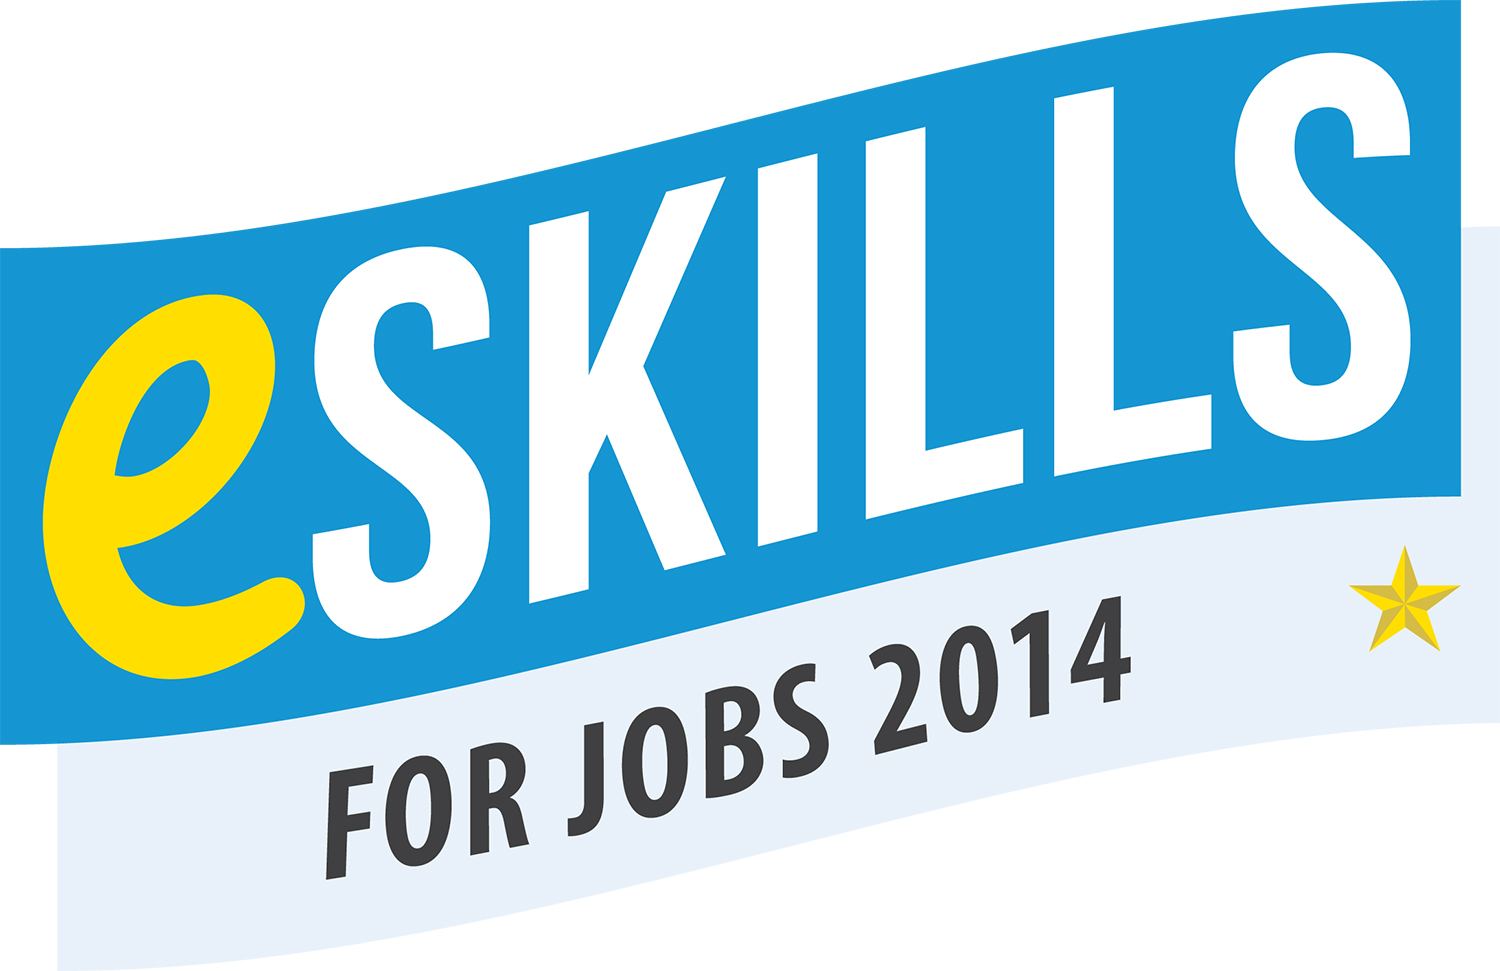 eSkills for job